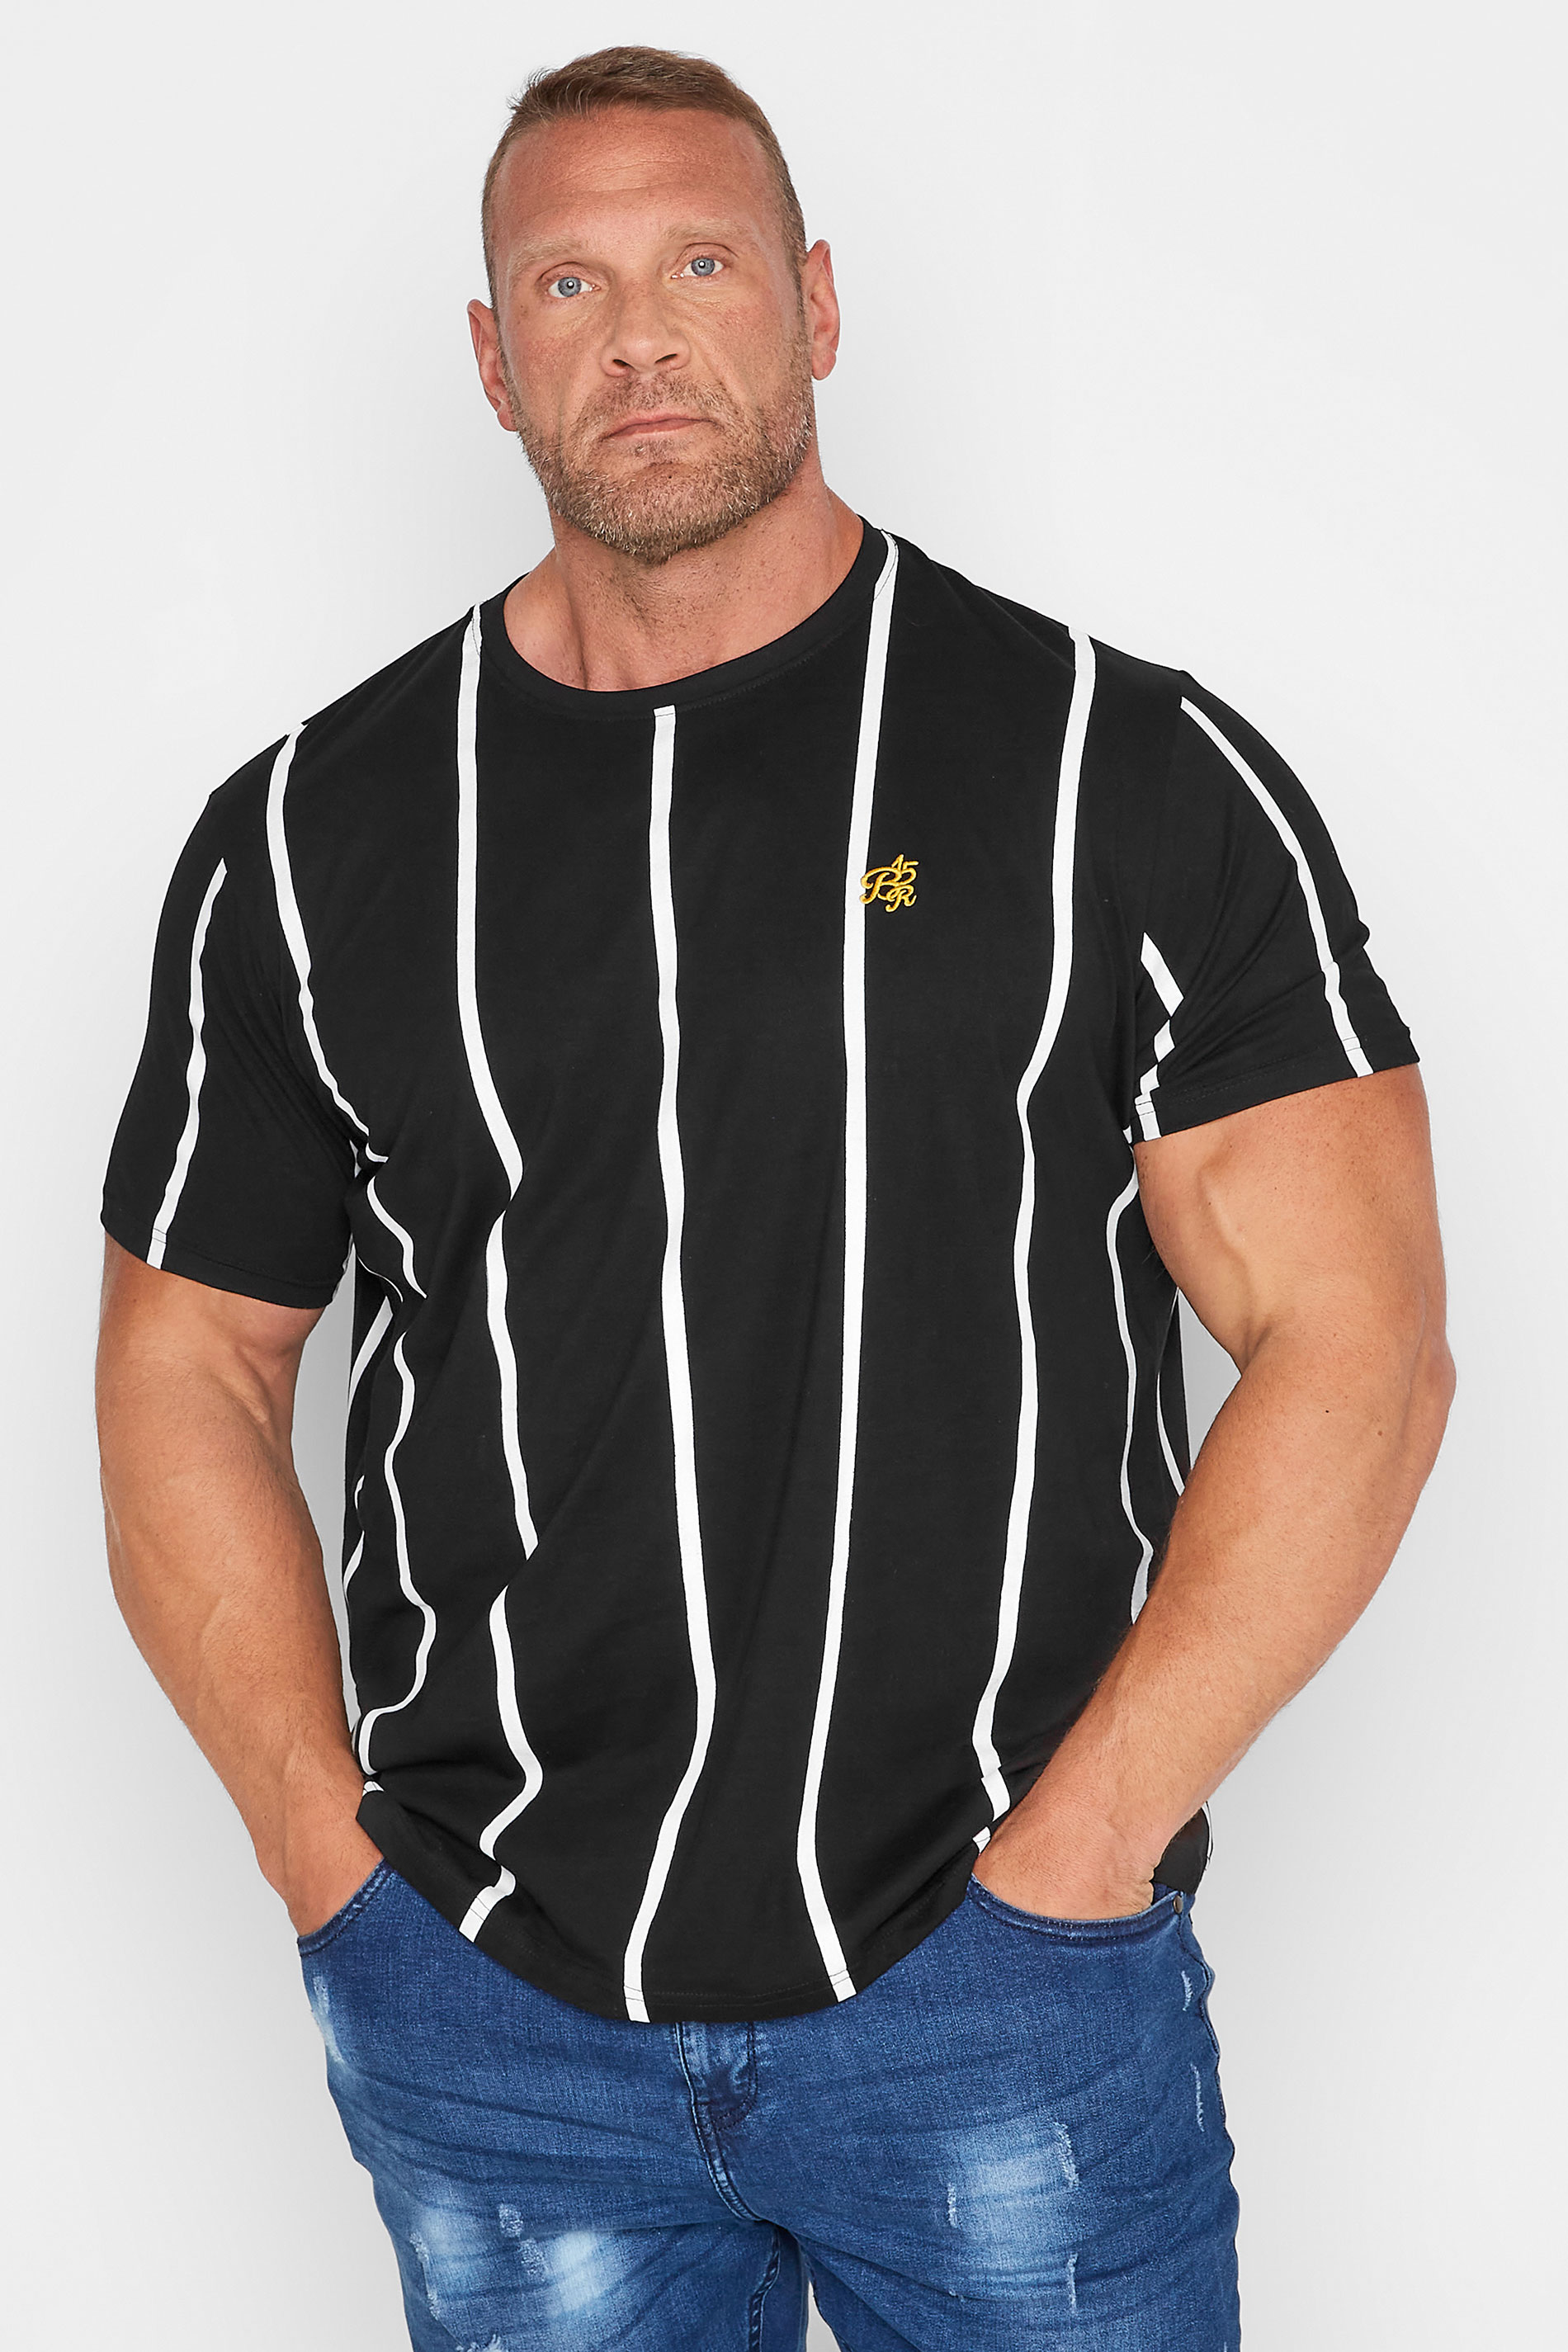 BadRhino Big & Tall Black Stripe Baseball T-Shirt | BadRhino 1